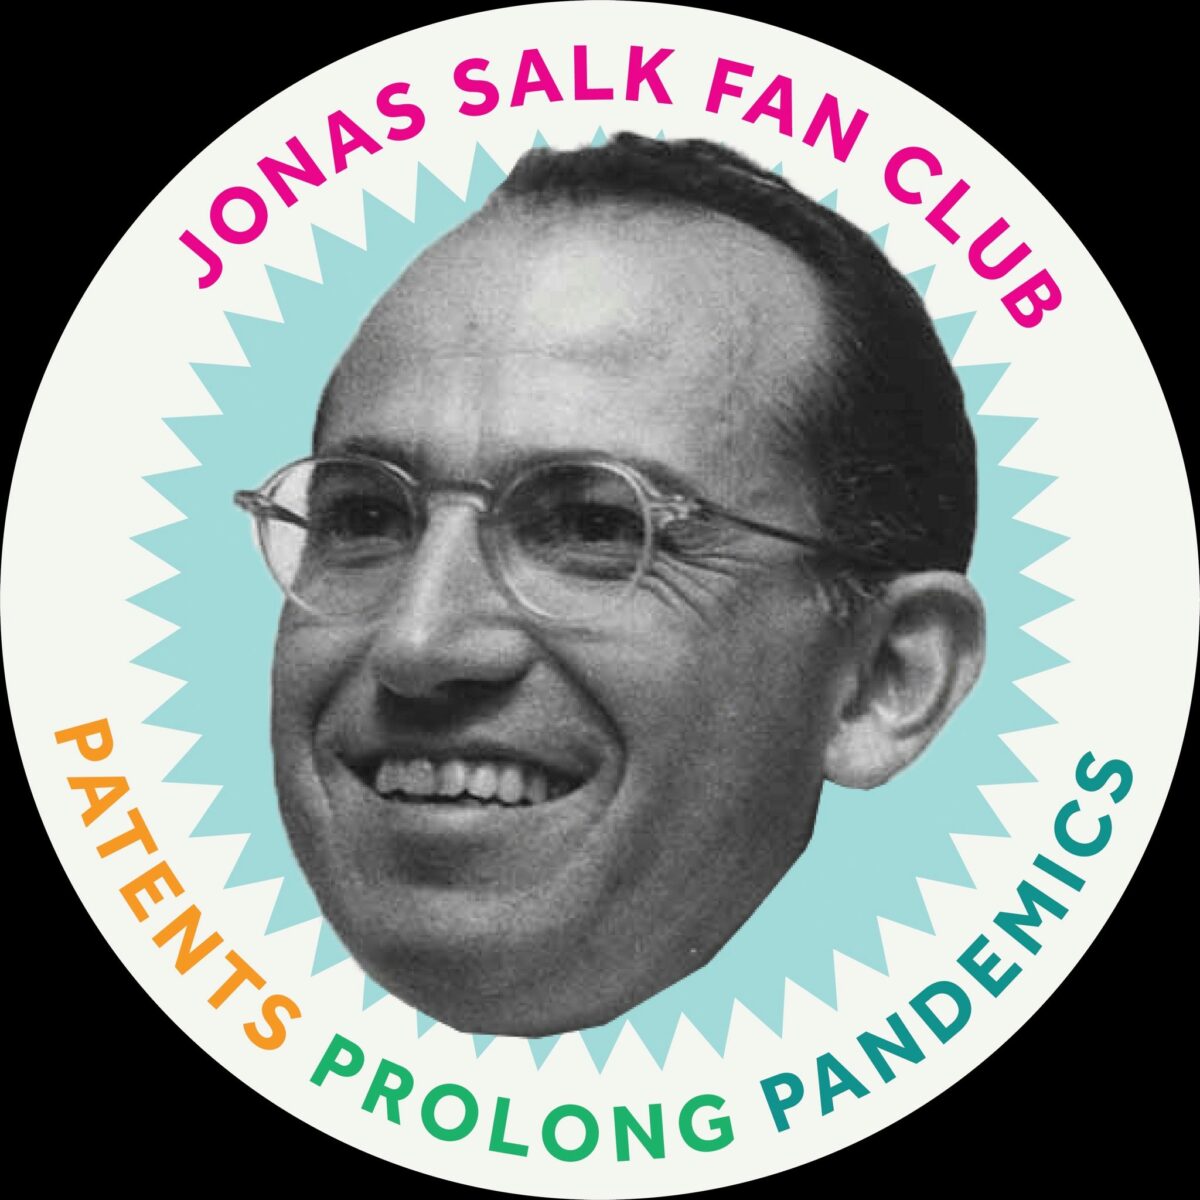 Jonas Salk Fan Club Sticker